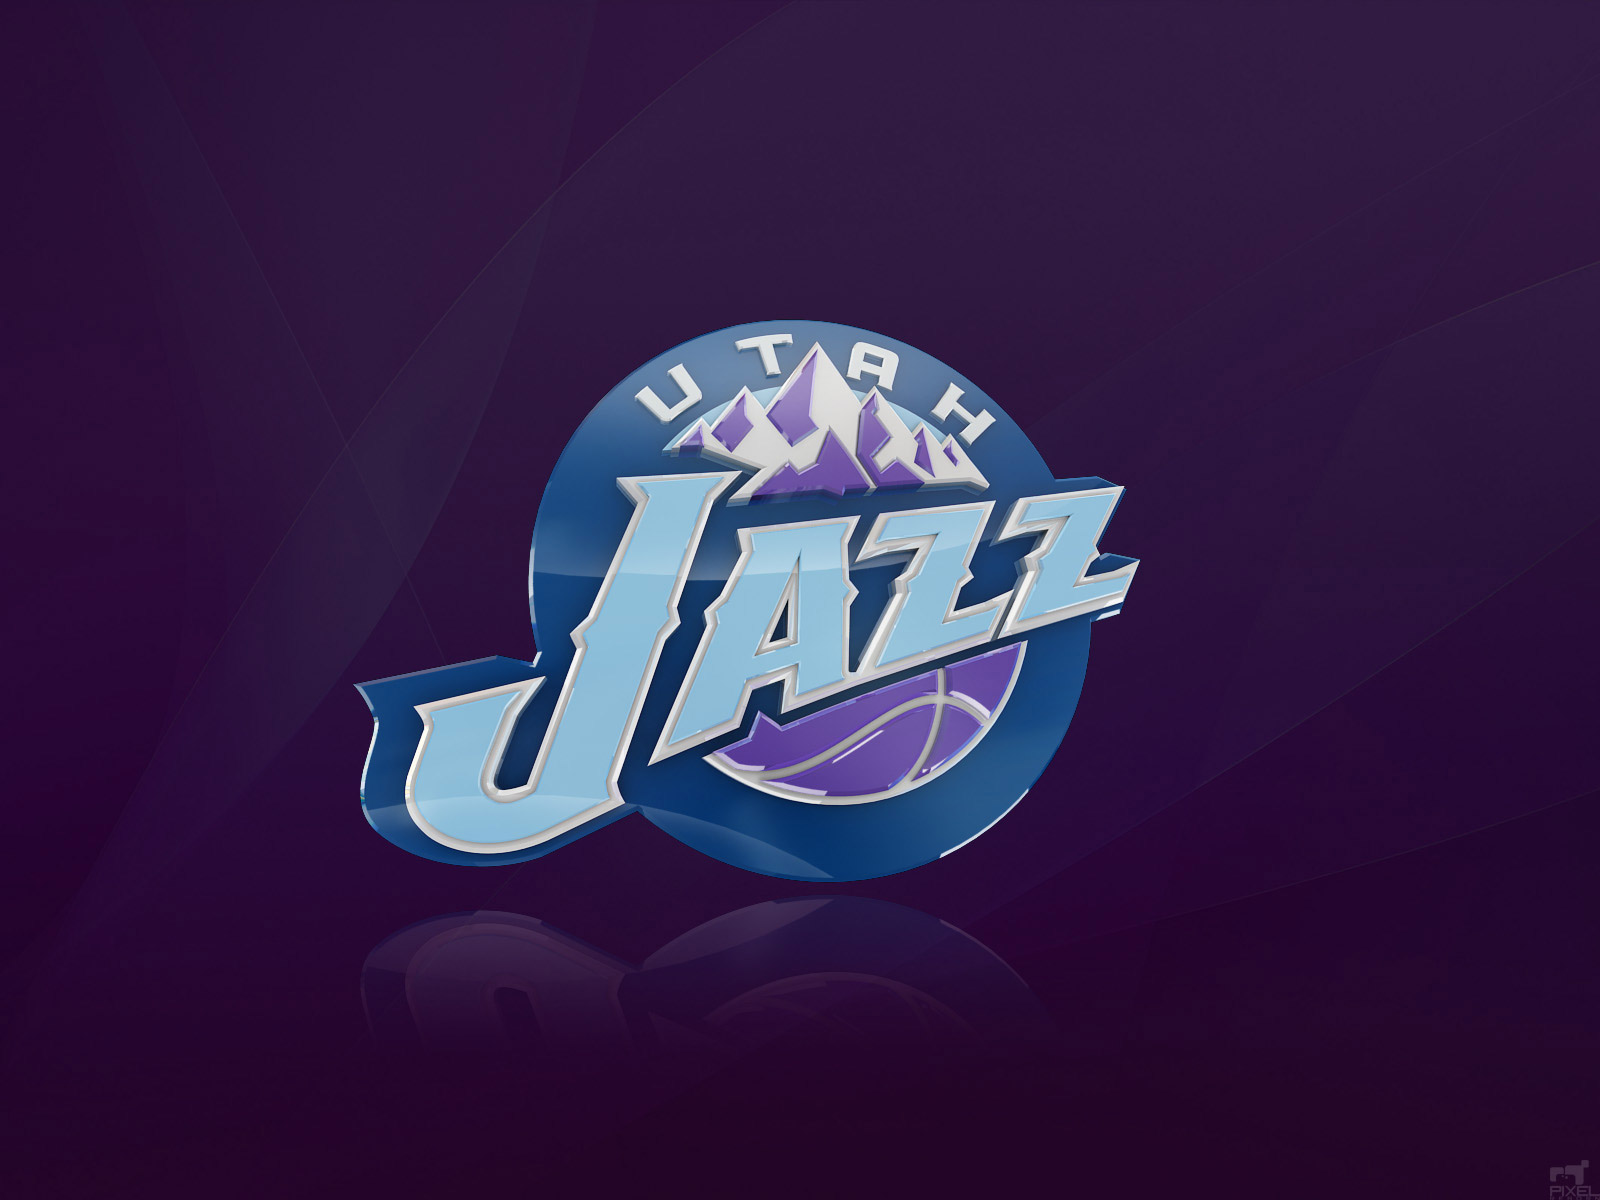 http://4.bp.blogspot.com/-XOgpJC2y8Lc/UKN1rS4M6AI/AAAAAAAAAqw/ACSGEKAq7Wc/s1600/utah-jazz-logo-wallpaper.jpg